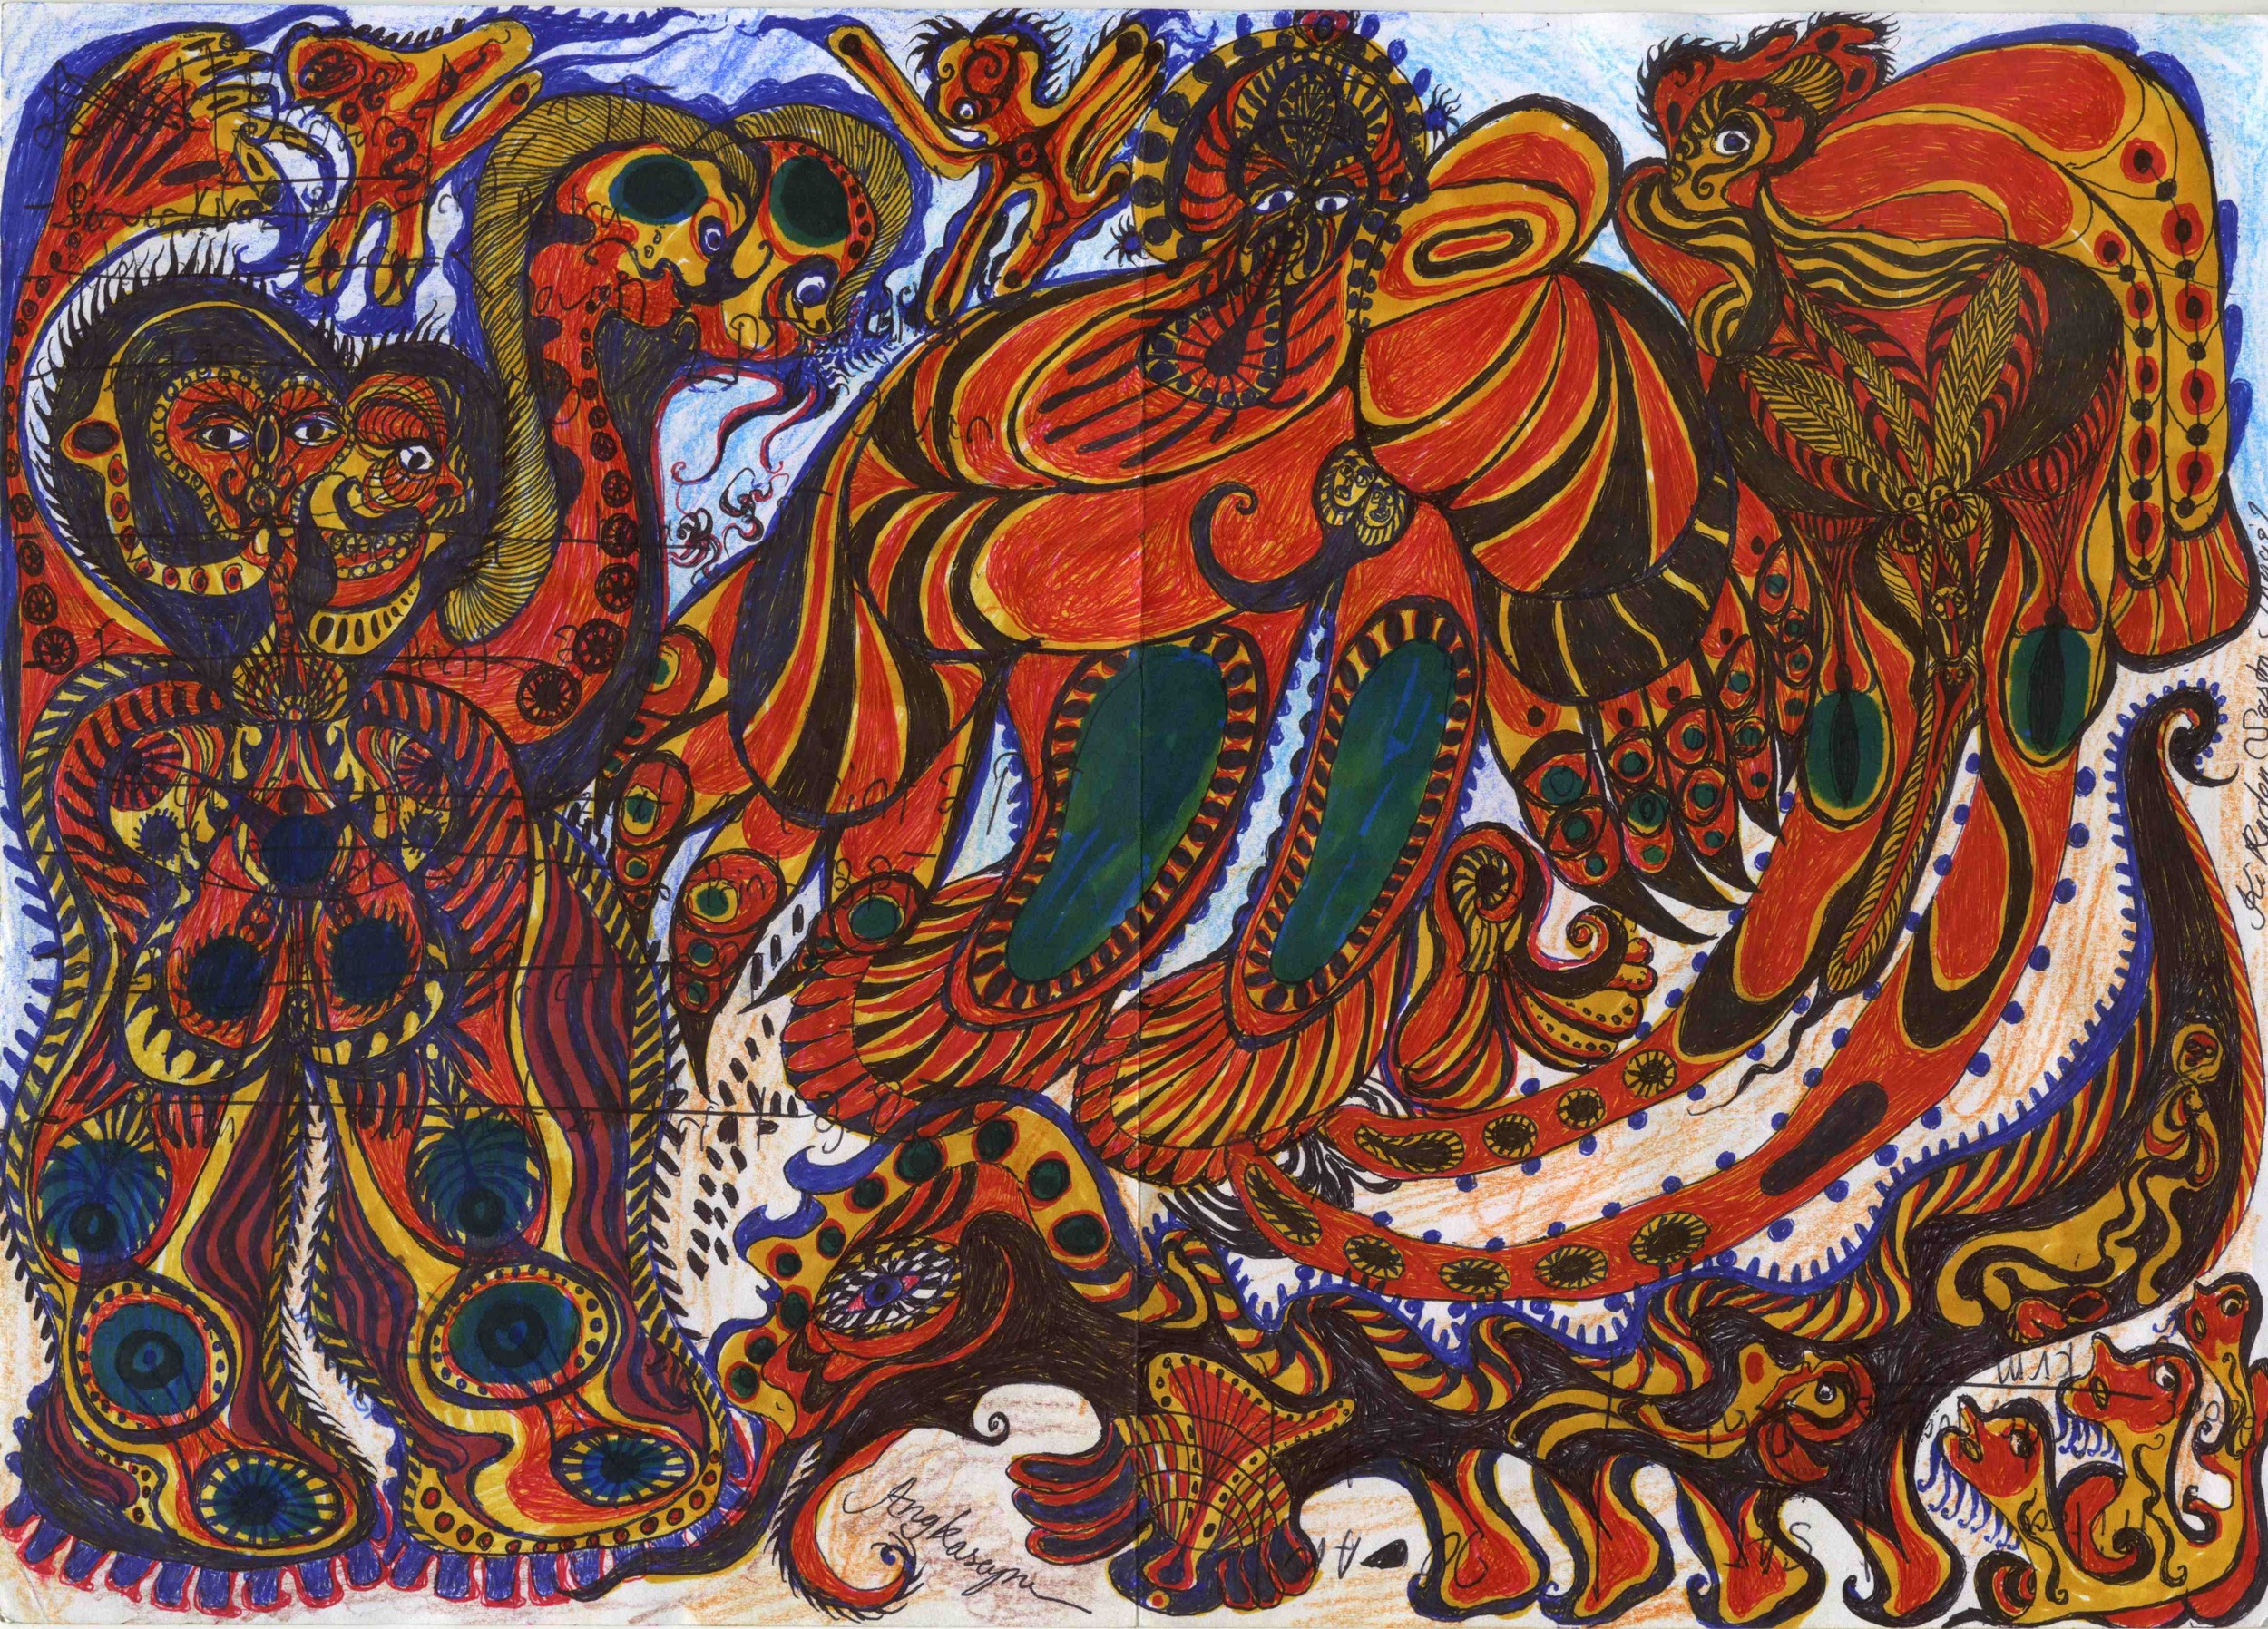   Noviadi Angkasapura    Untitled  , 2014 Ink on found paper 8.25 x 11.75 inches 21 x 29.8 cm NoA 105 